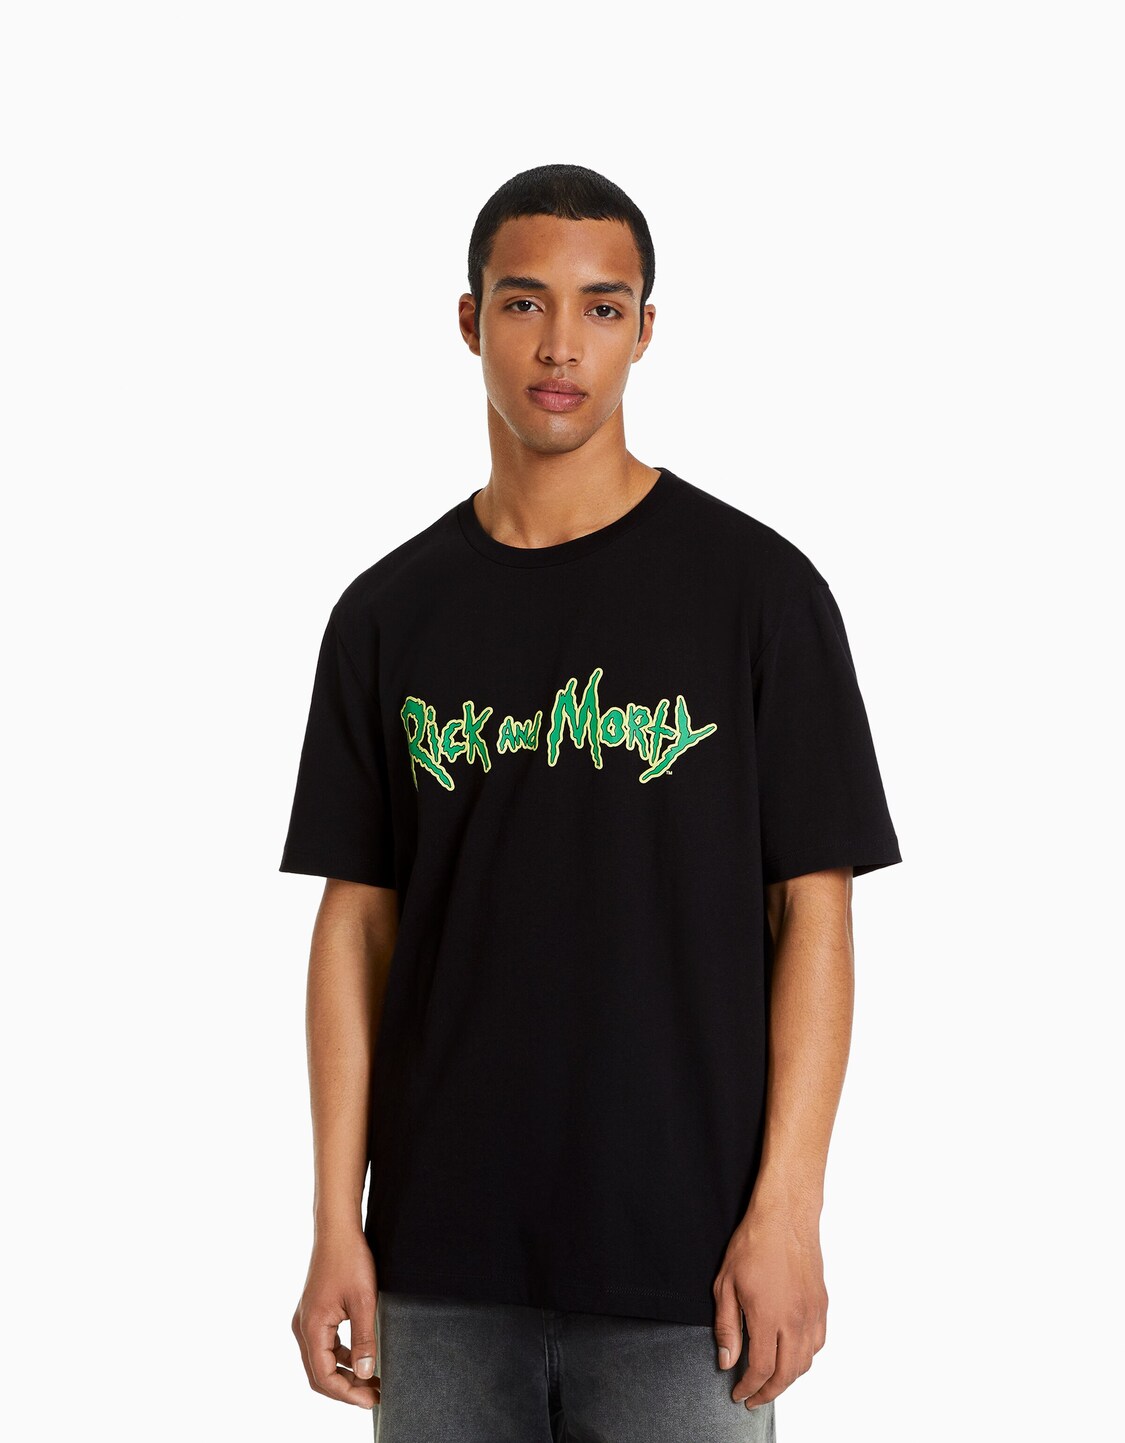 Rick Morty print regular fit short sleeve T-shirt - Men |